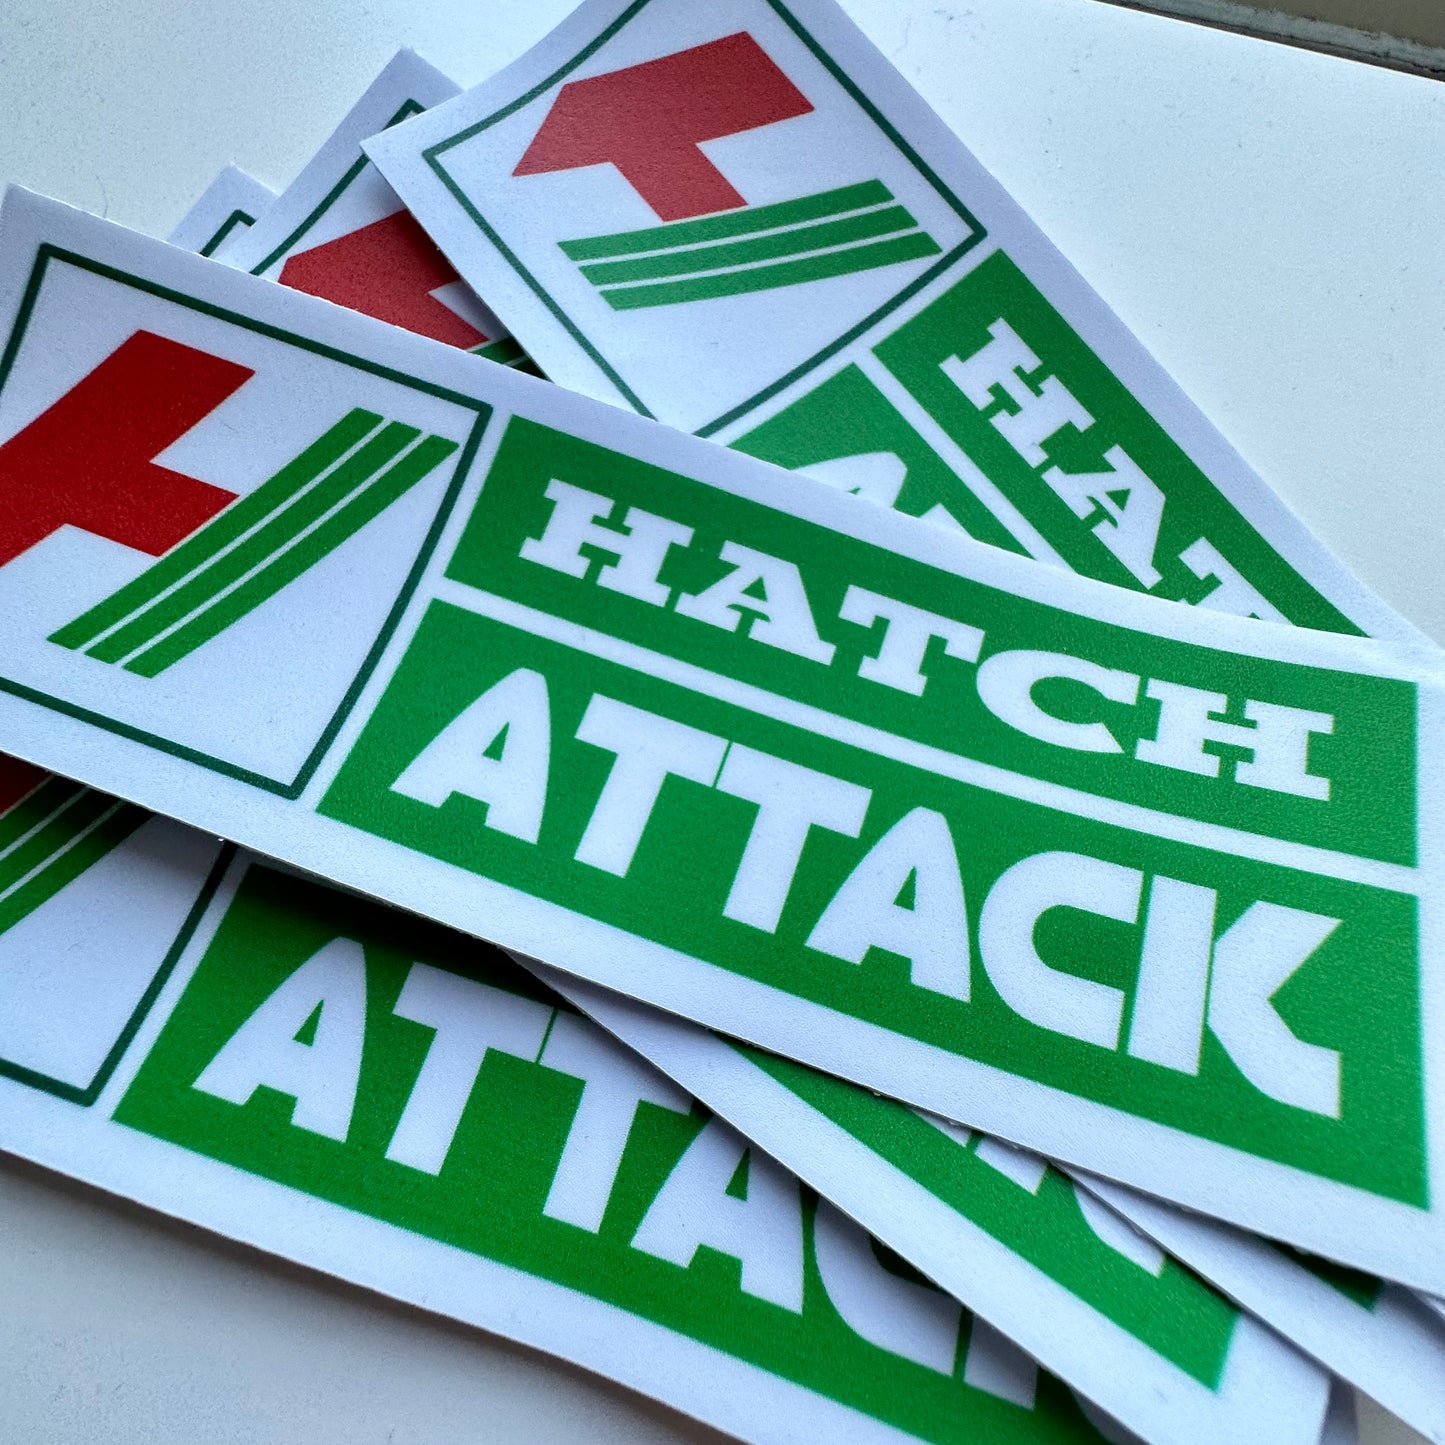 HatchAttack! “Verno” Decal Slap